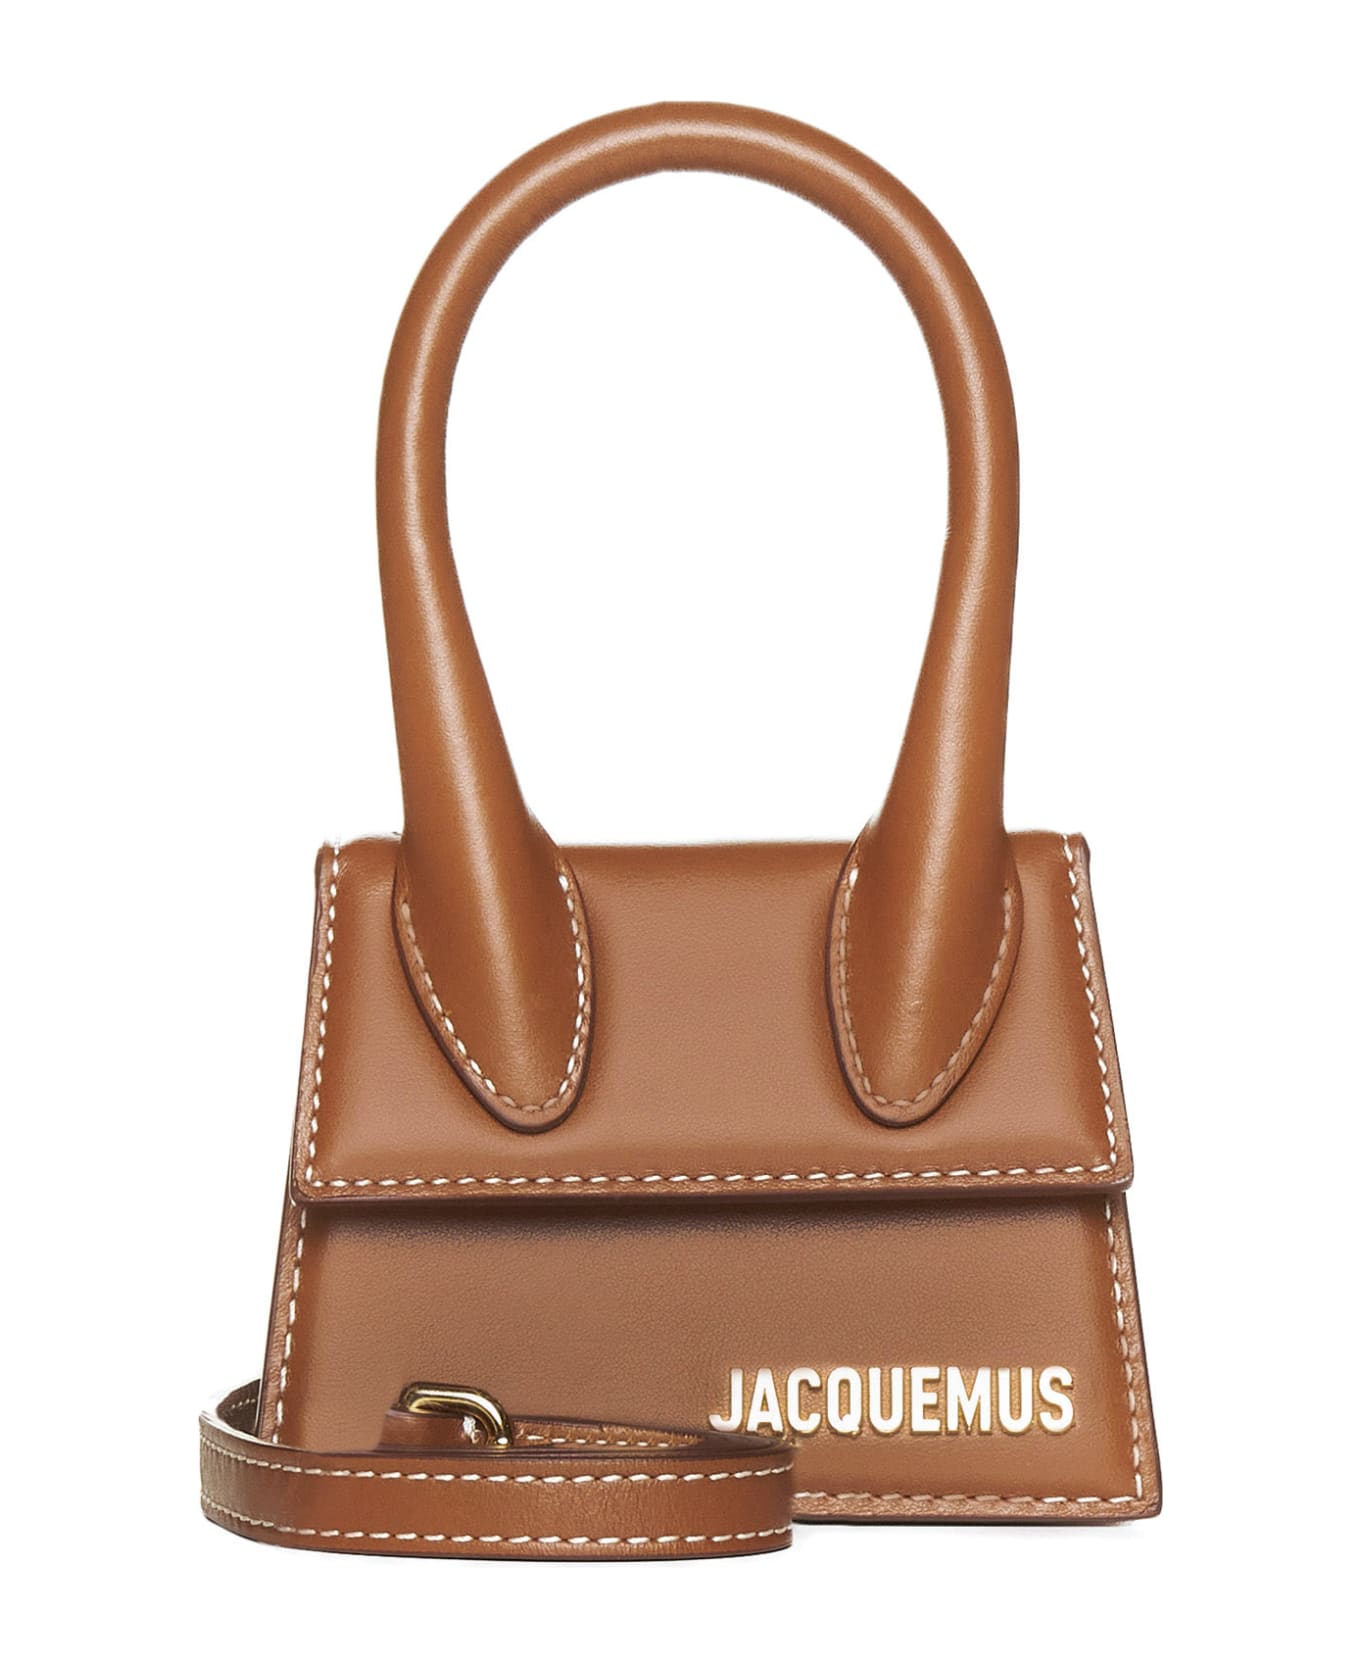 Jacquemus Le Chiquito Leather Mini Bag - Light brown